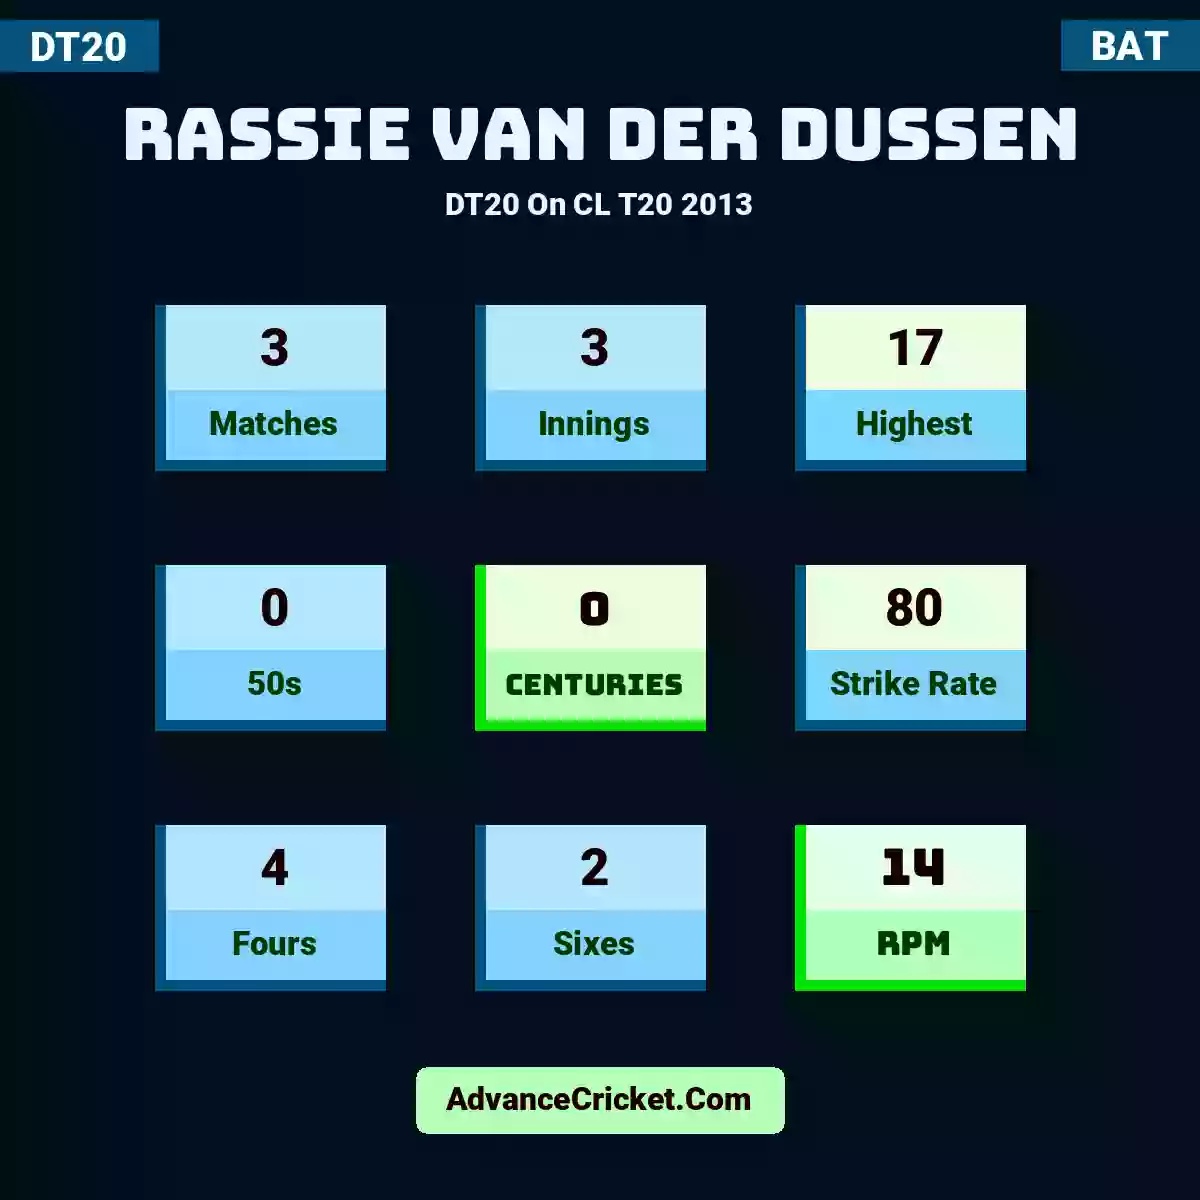 Rassie van der Dussen DT20  On CL T20 2013, Rassie van der Dussen played 3 matches, scored 17 runs as highest, 0 half-centuries, and 0 centuries, with a strike rate of 80. R.Dussen hit 4 fours and 2 sixes, with an RPM of 14.